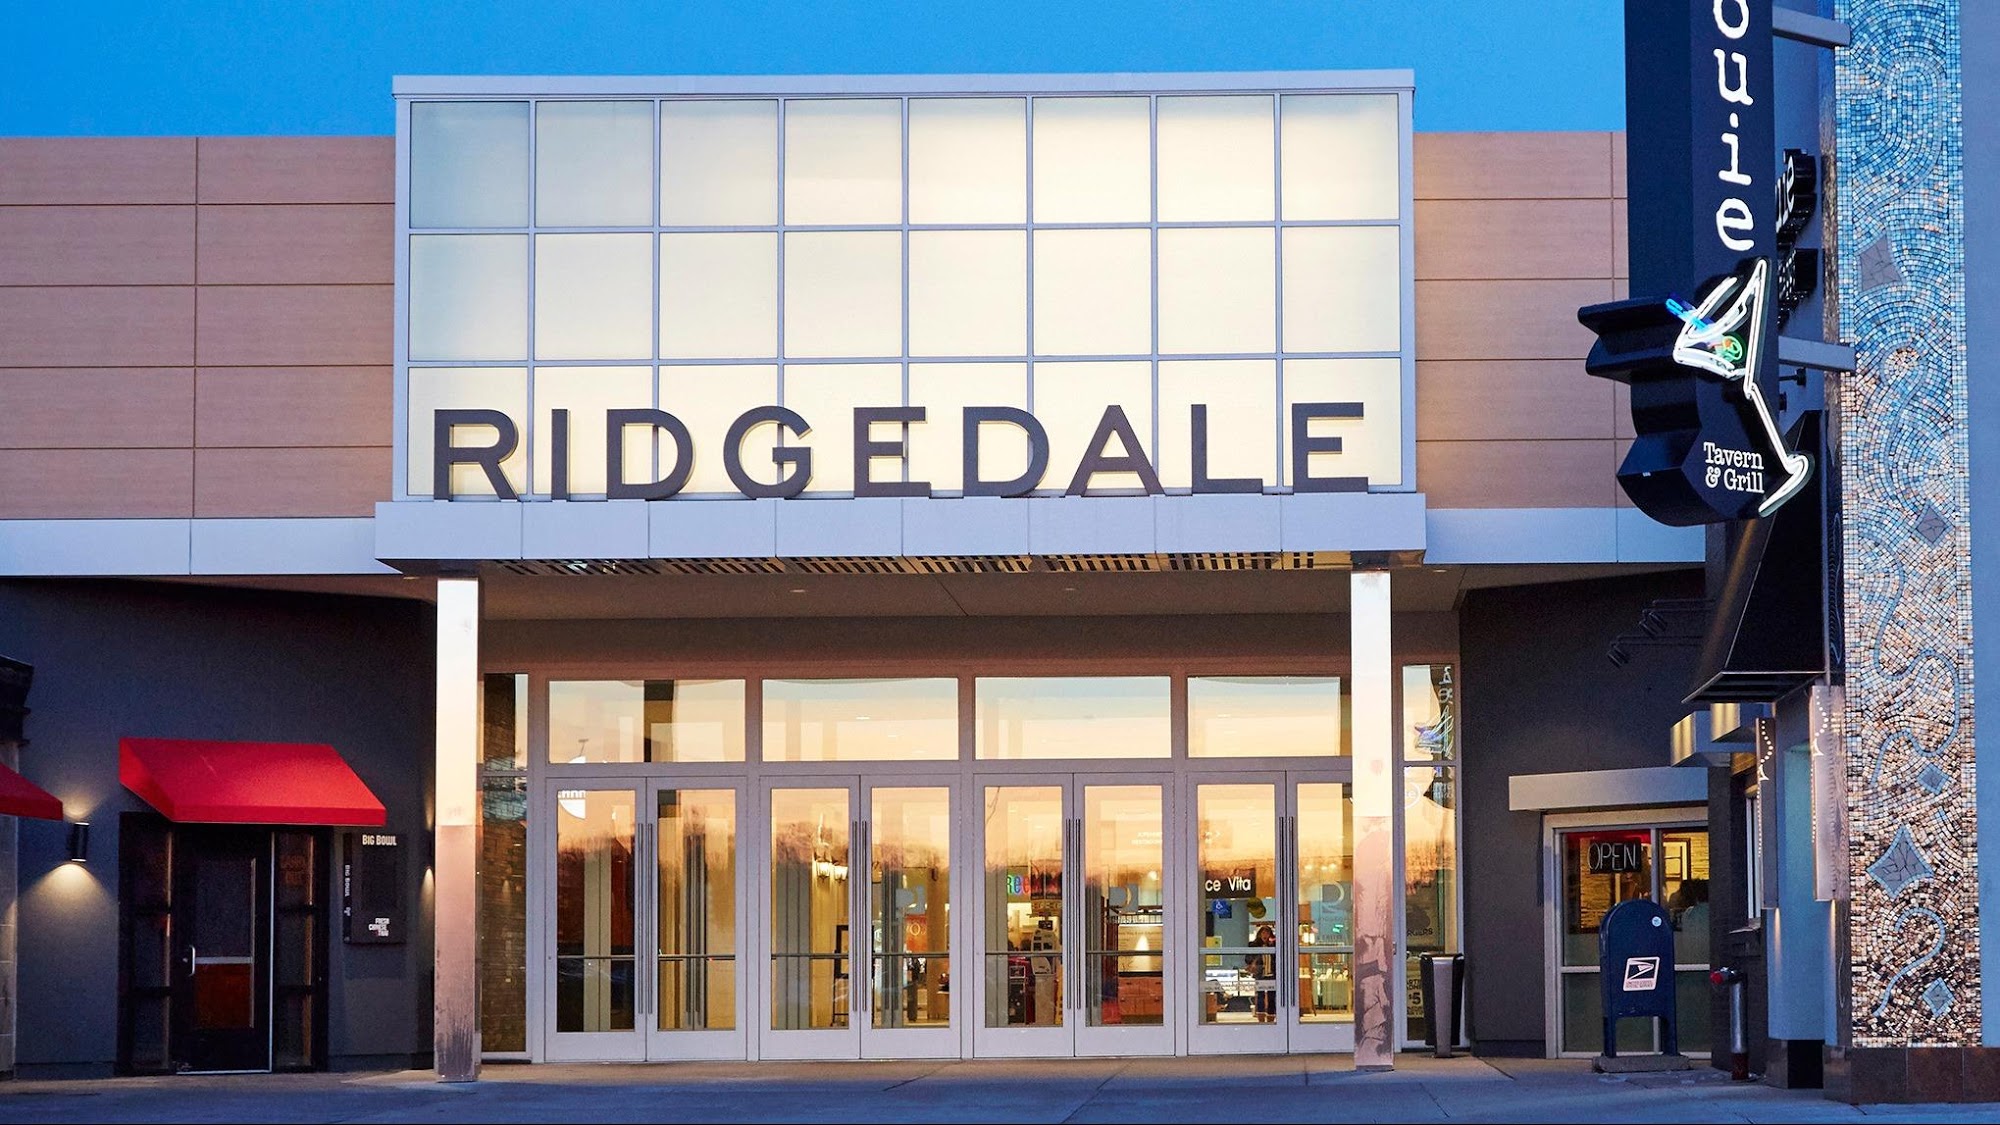 Ridgedale Center